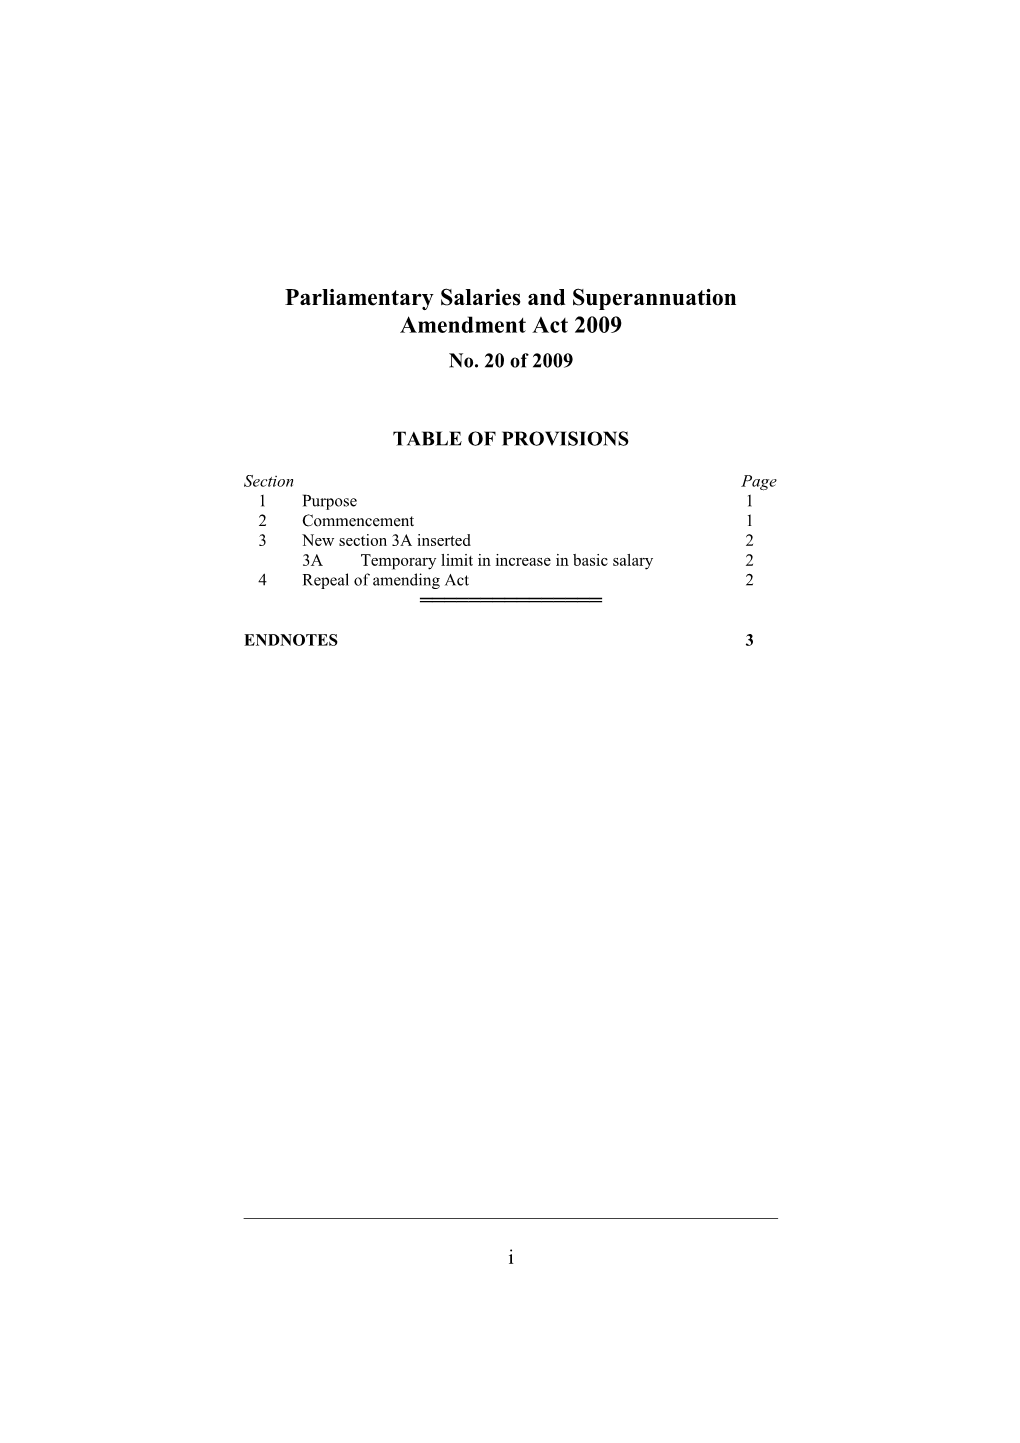 Parliamentary Salaries and Superannuation Amendment Act 2009